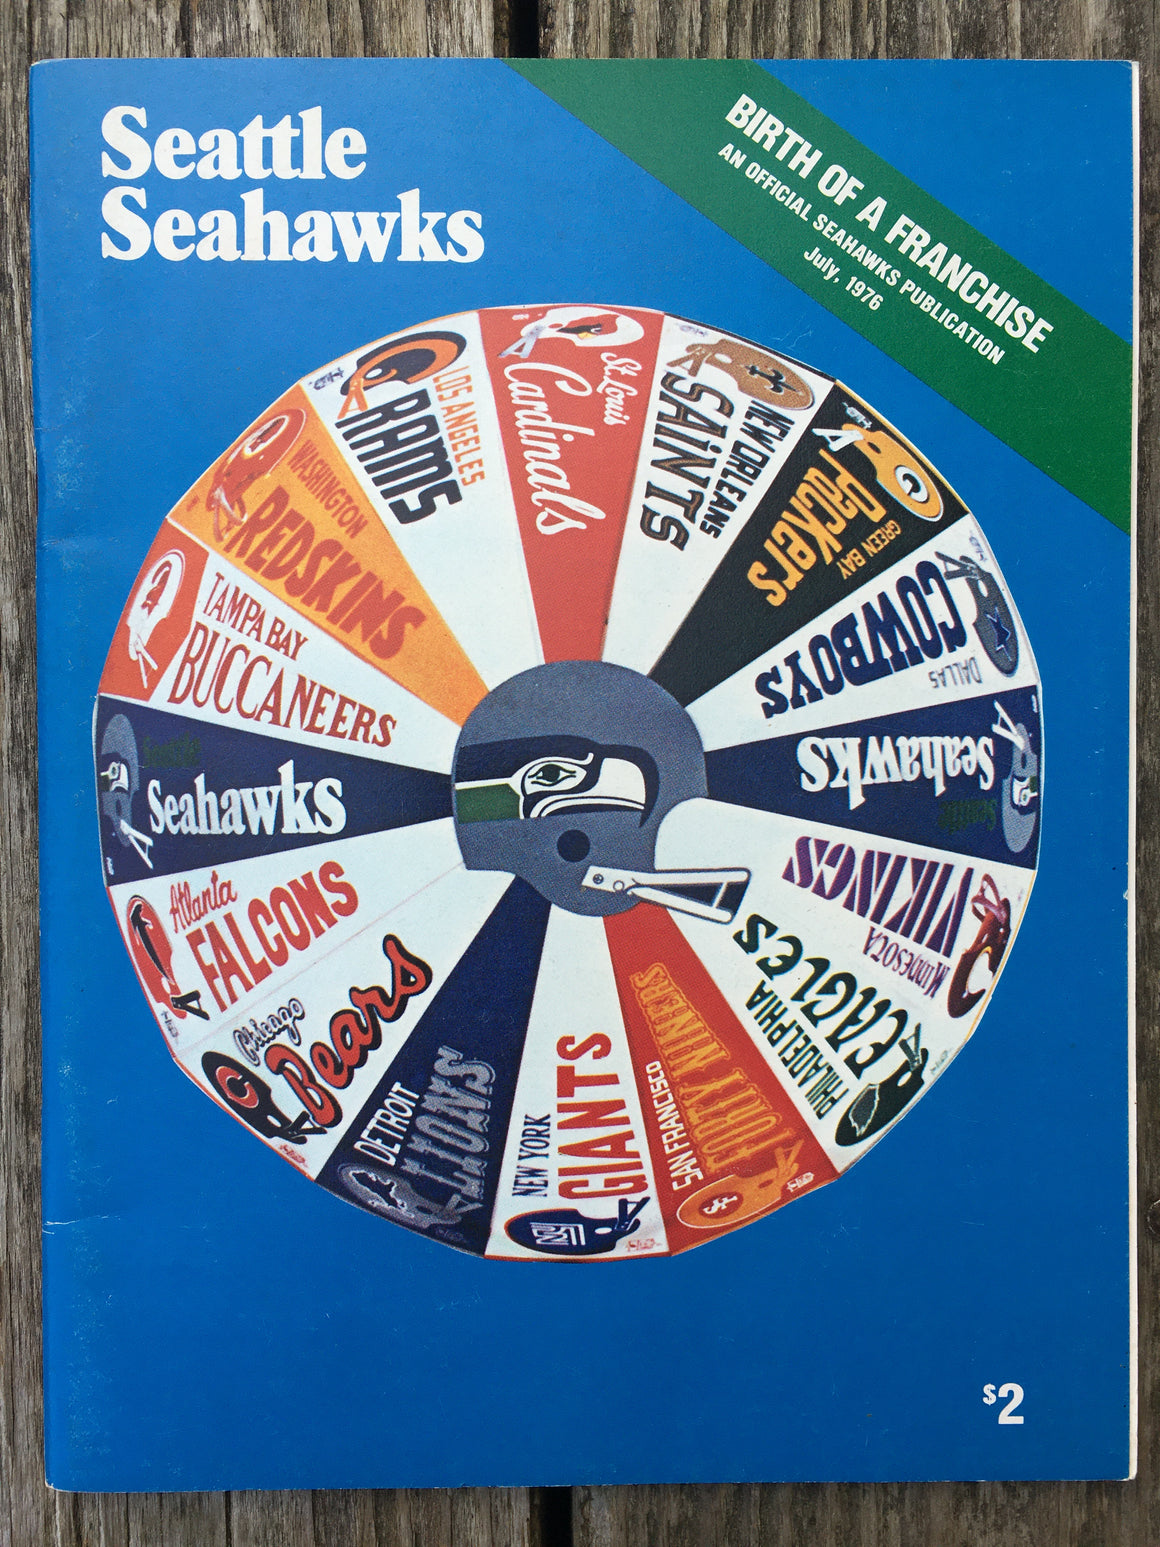 Seattle Seahawks inaugural season book / program